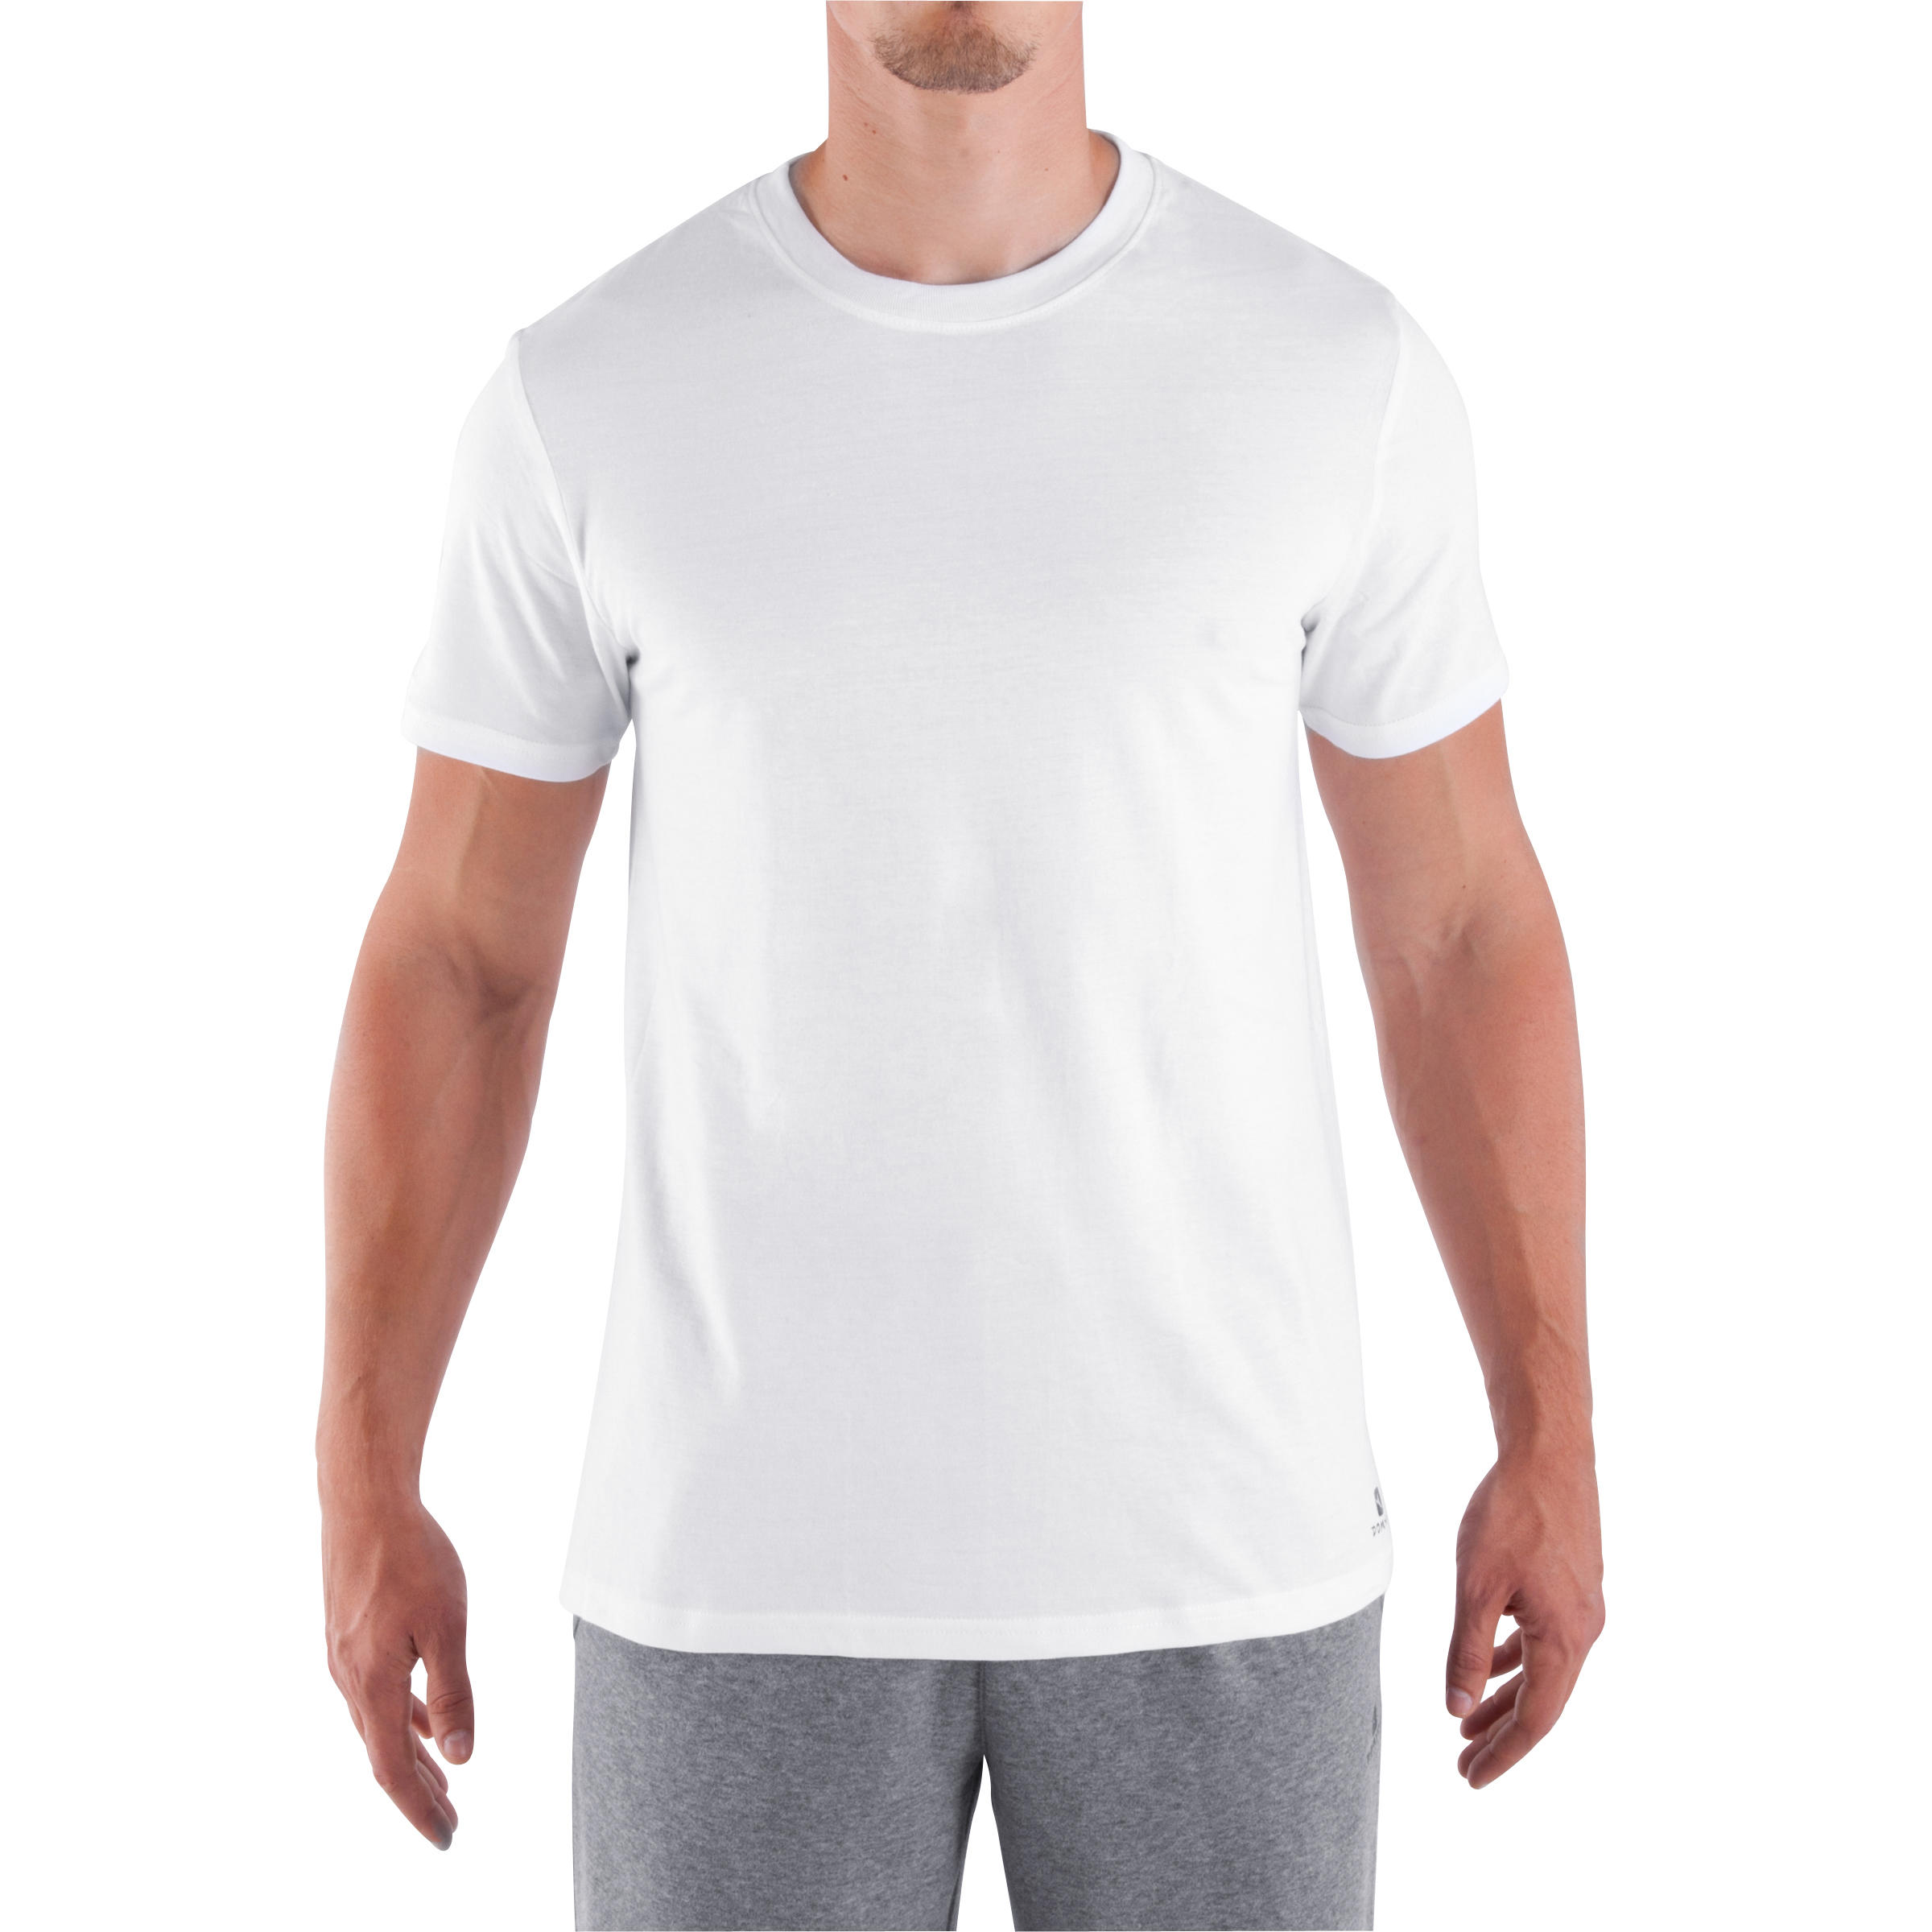 decathlon t shirts for men